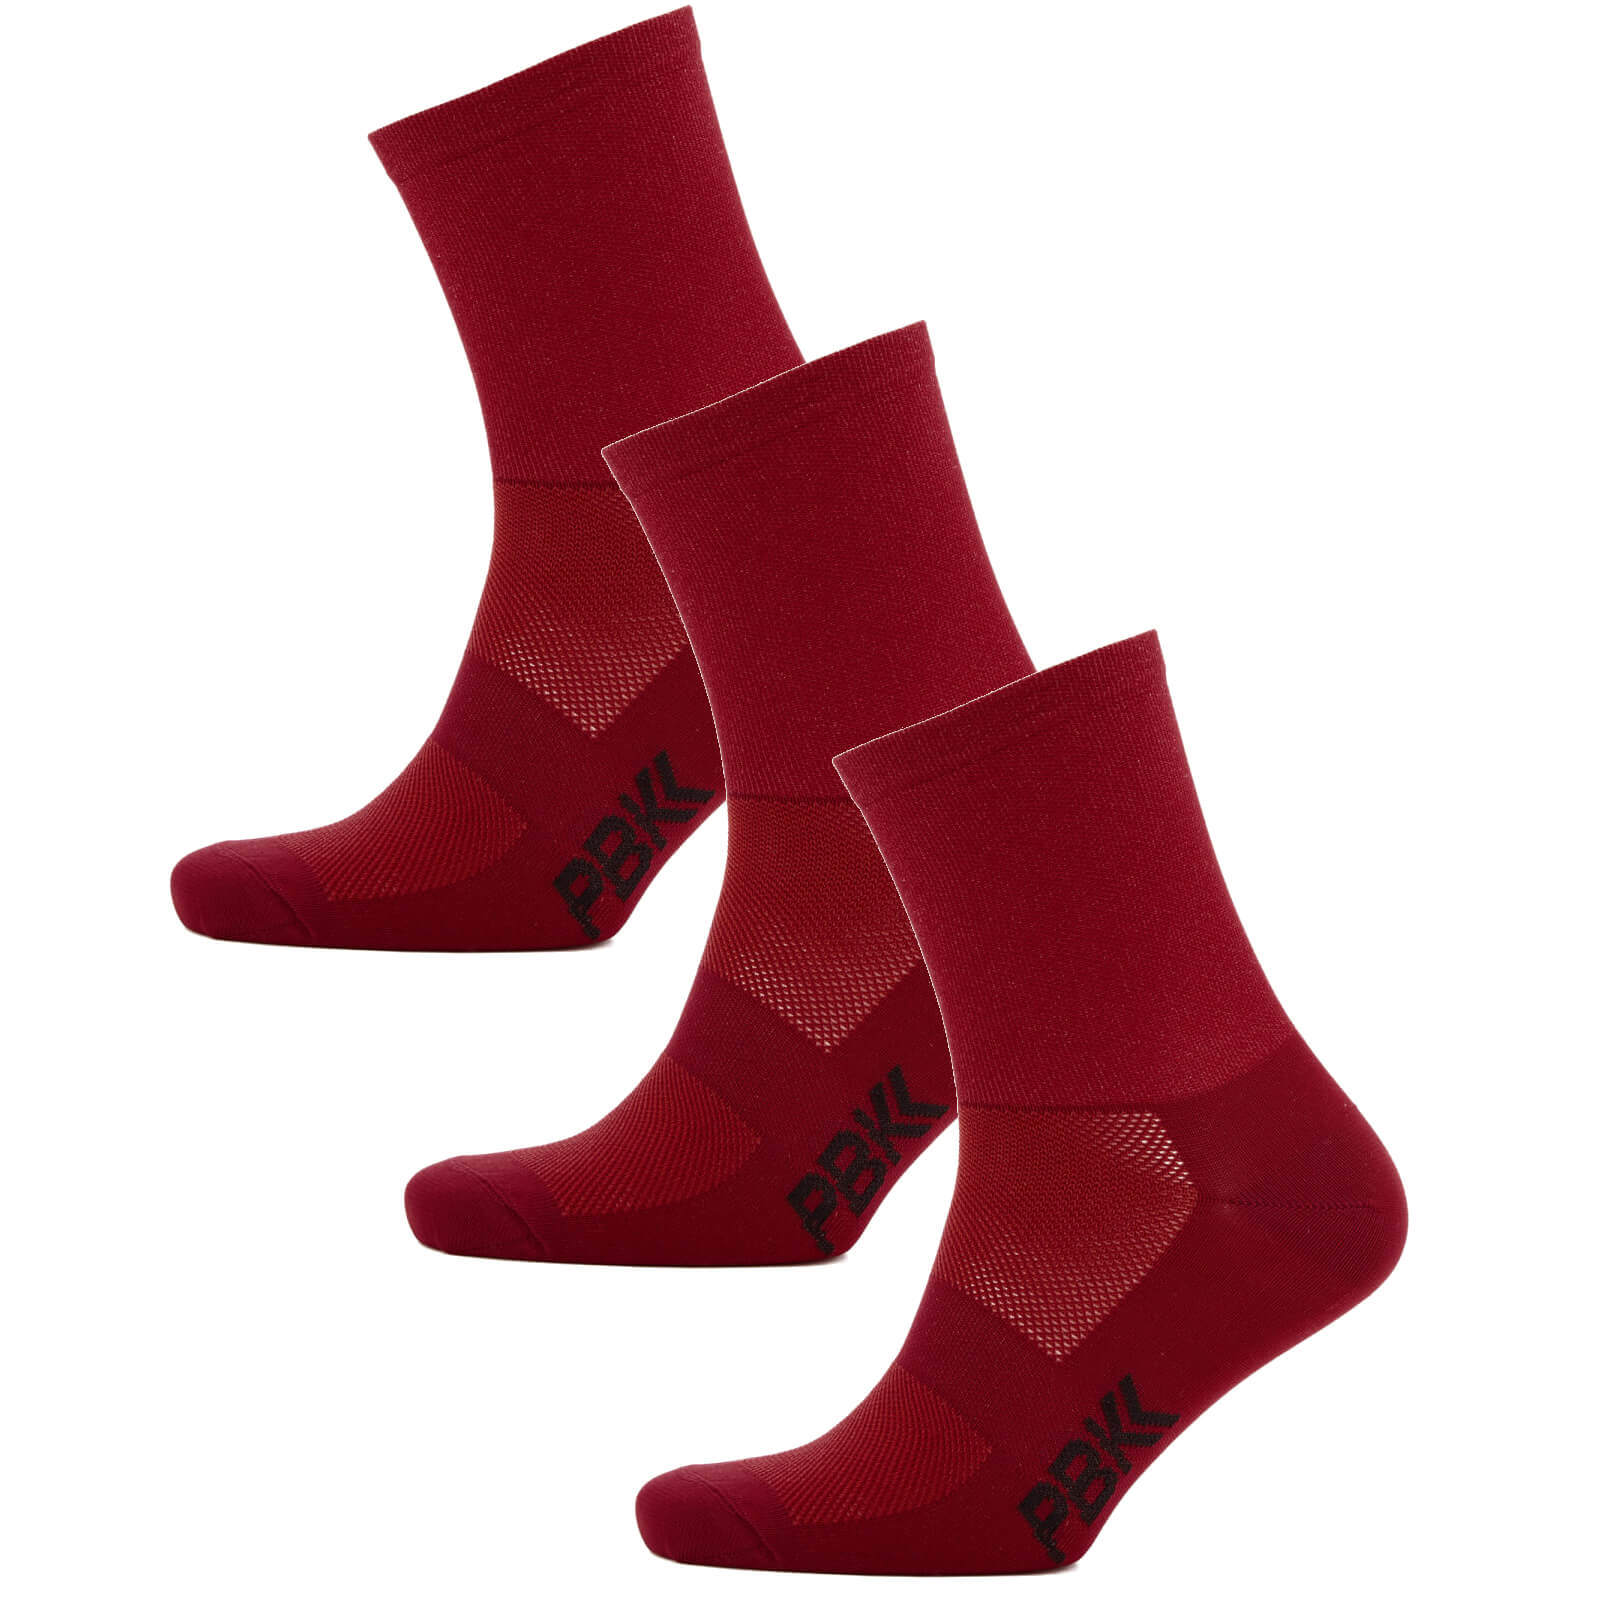 PBK Lightweight Socks Multipack - 3 Pairs - Red - S-M - Red